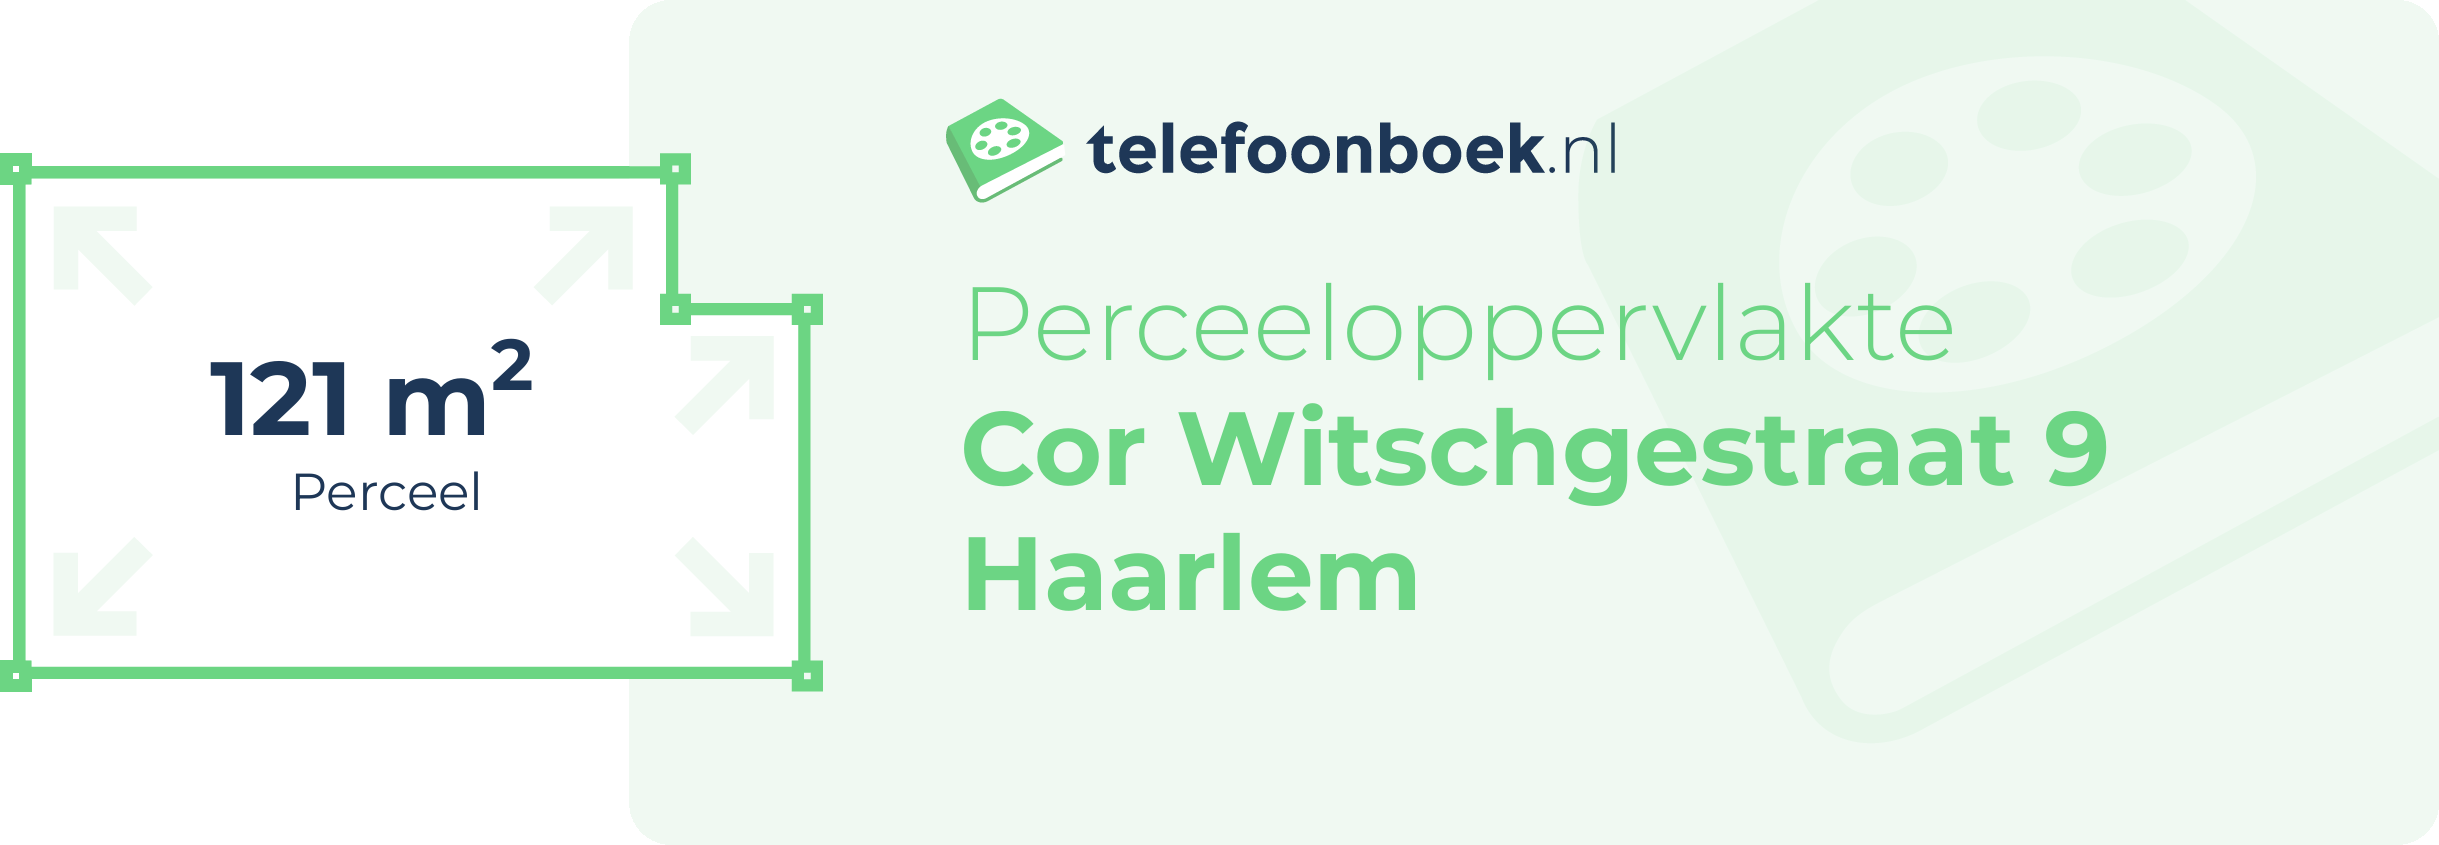 Perceeloppervlakte Cor Witschgestraat 9 Haarlem